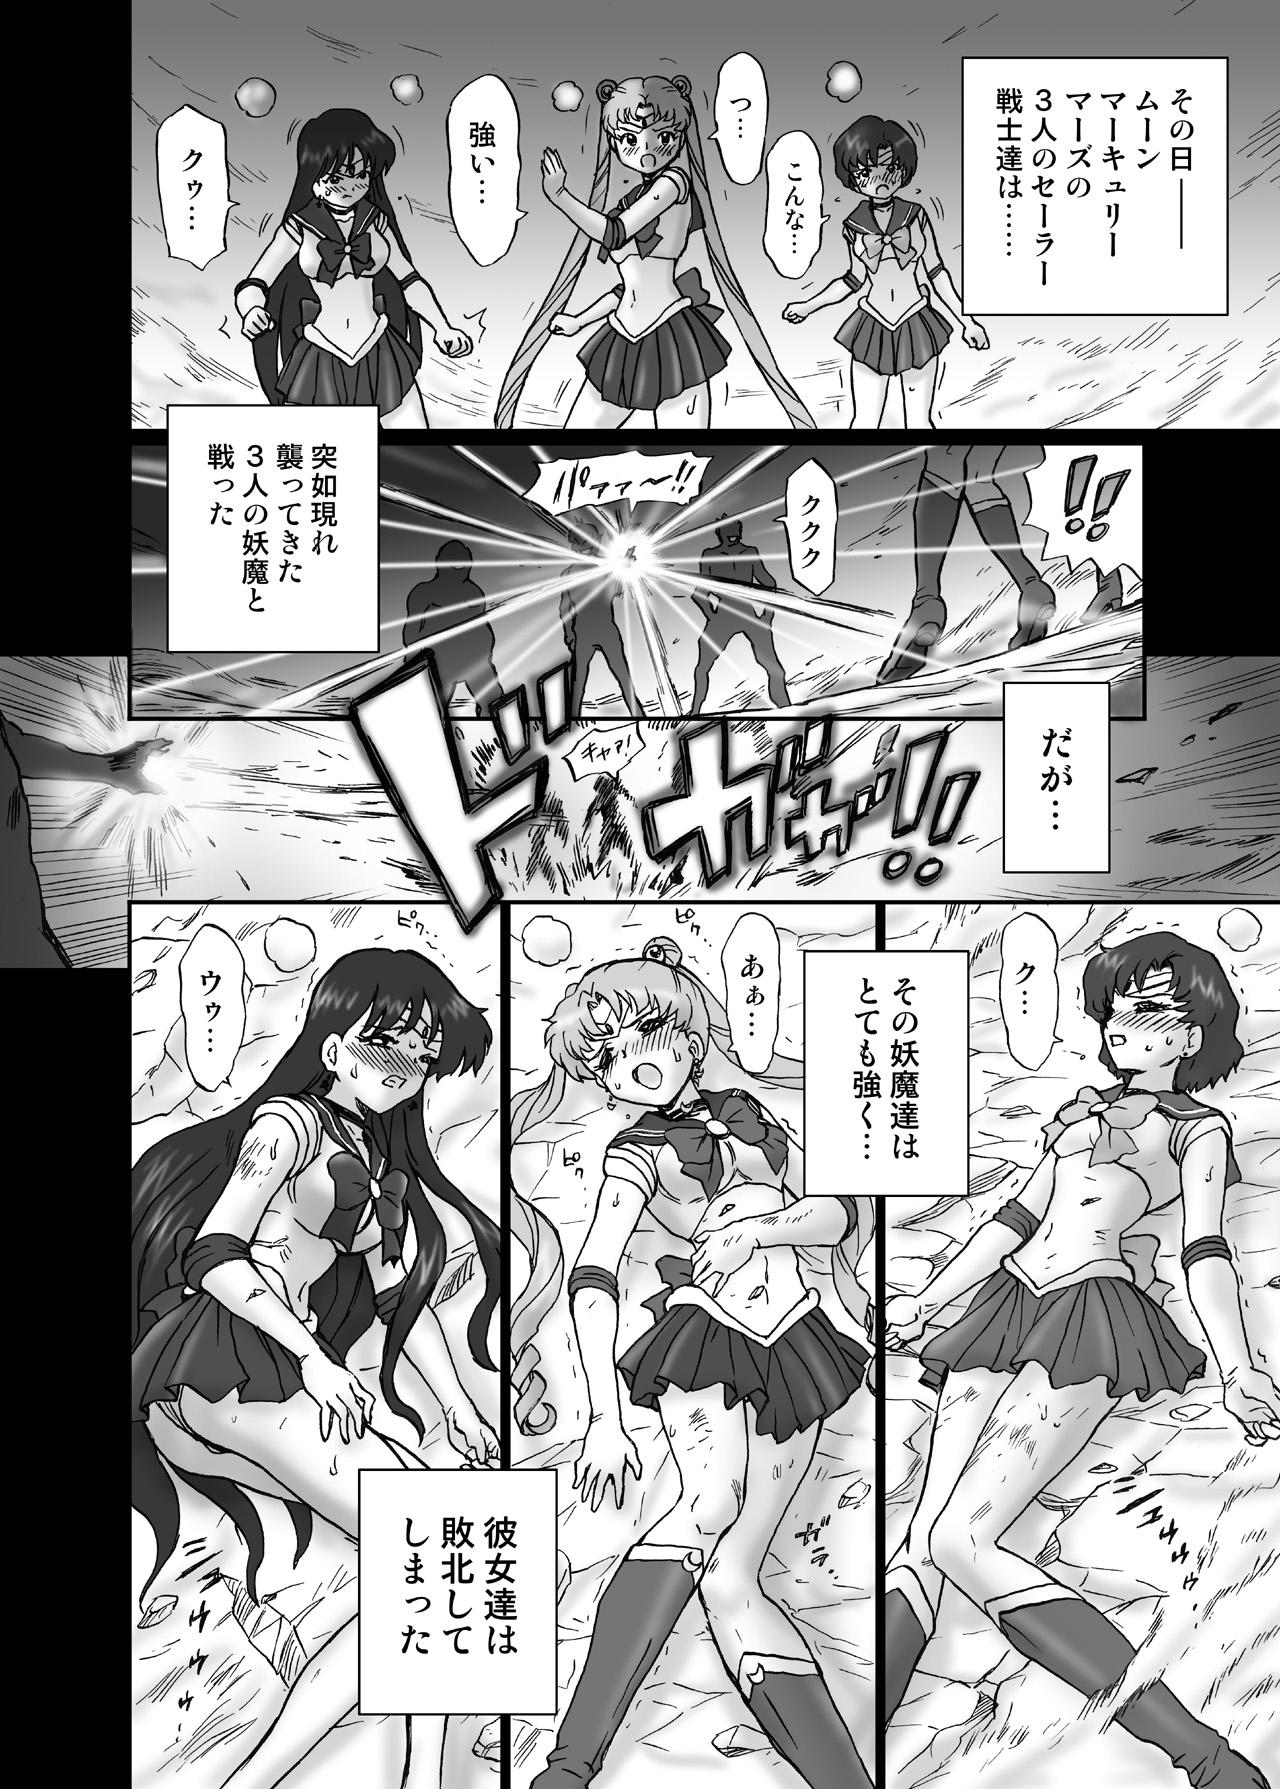 Breast IRIE YAMAZAKI "Sailor Moon" Anal & Scatolo Sakuhinshuu Ver. 1 - Sailor moon Amateurs - Page 3